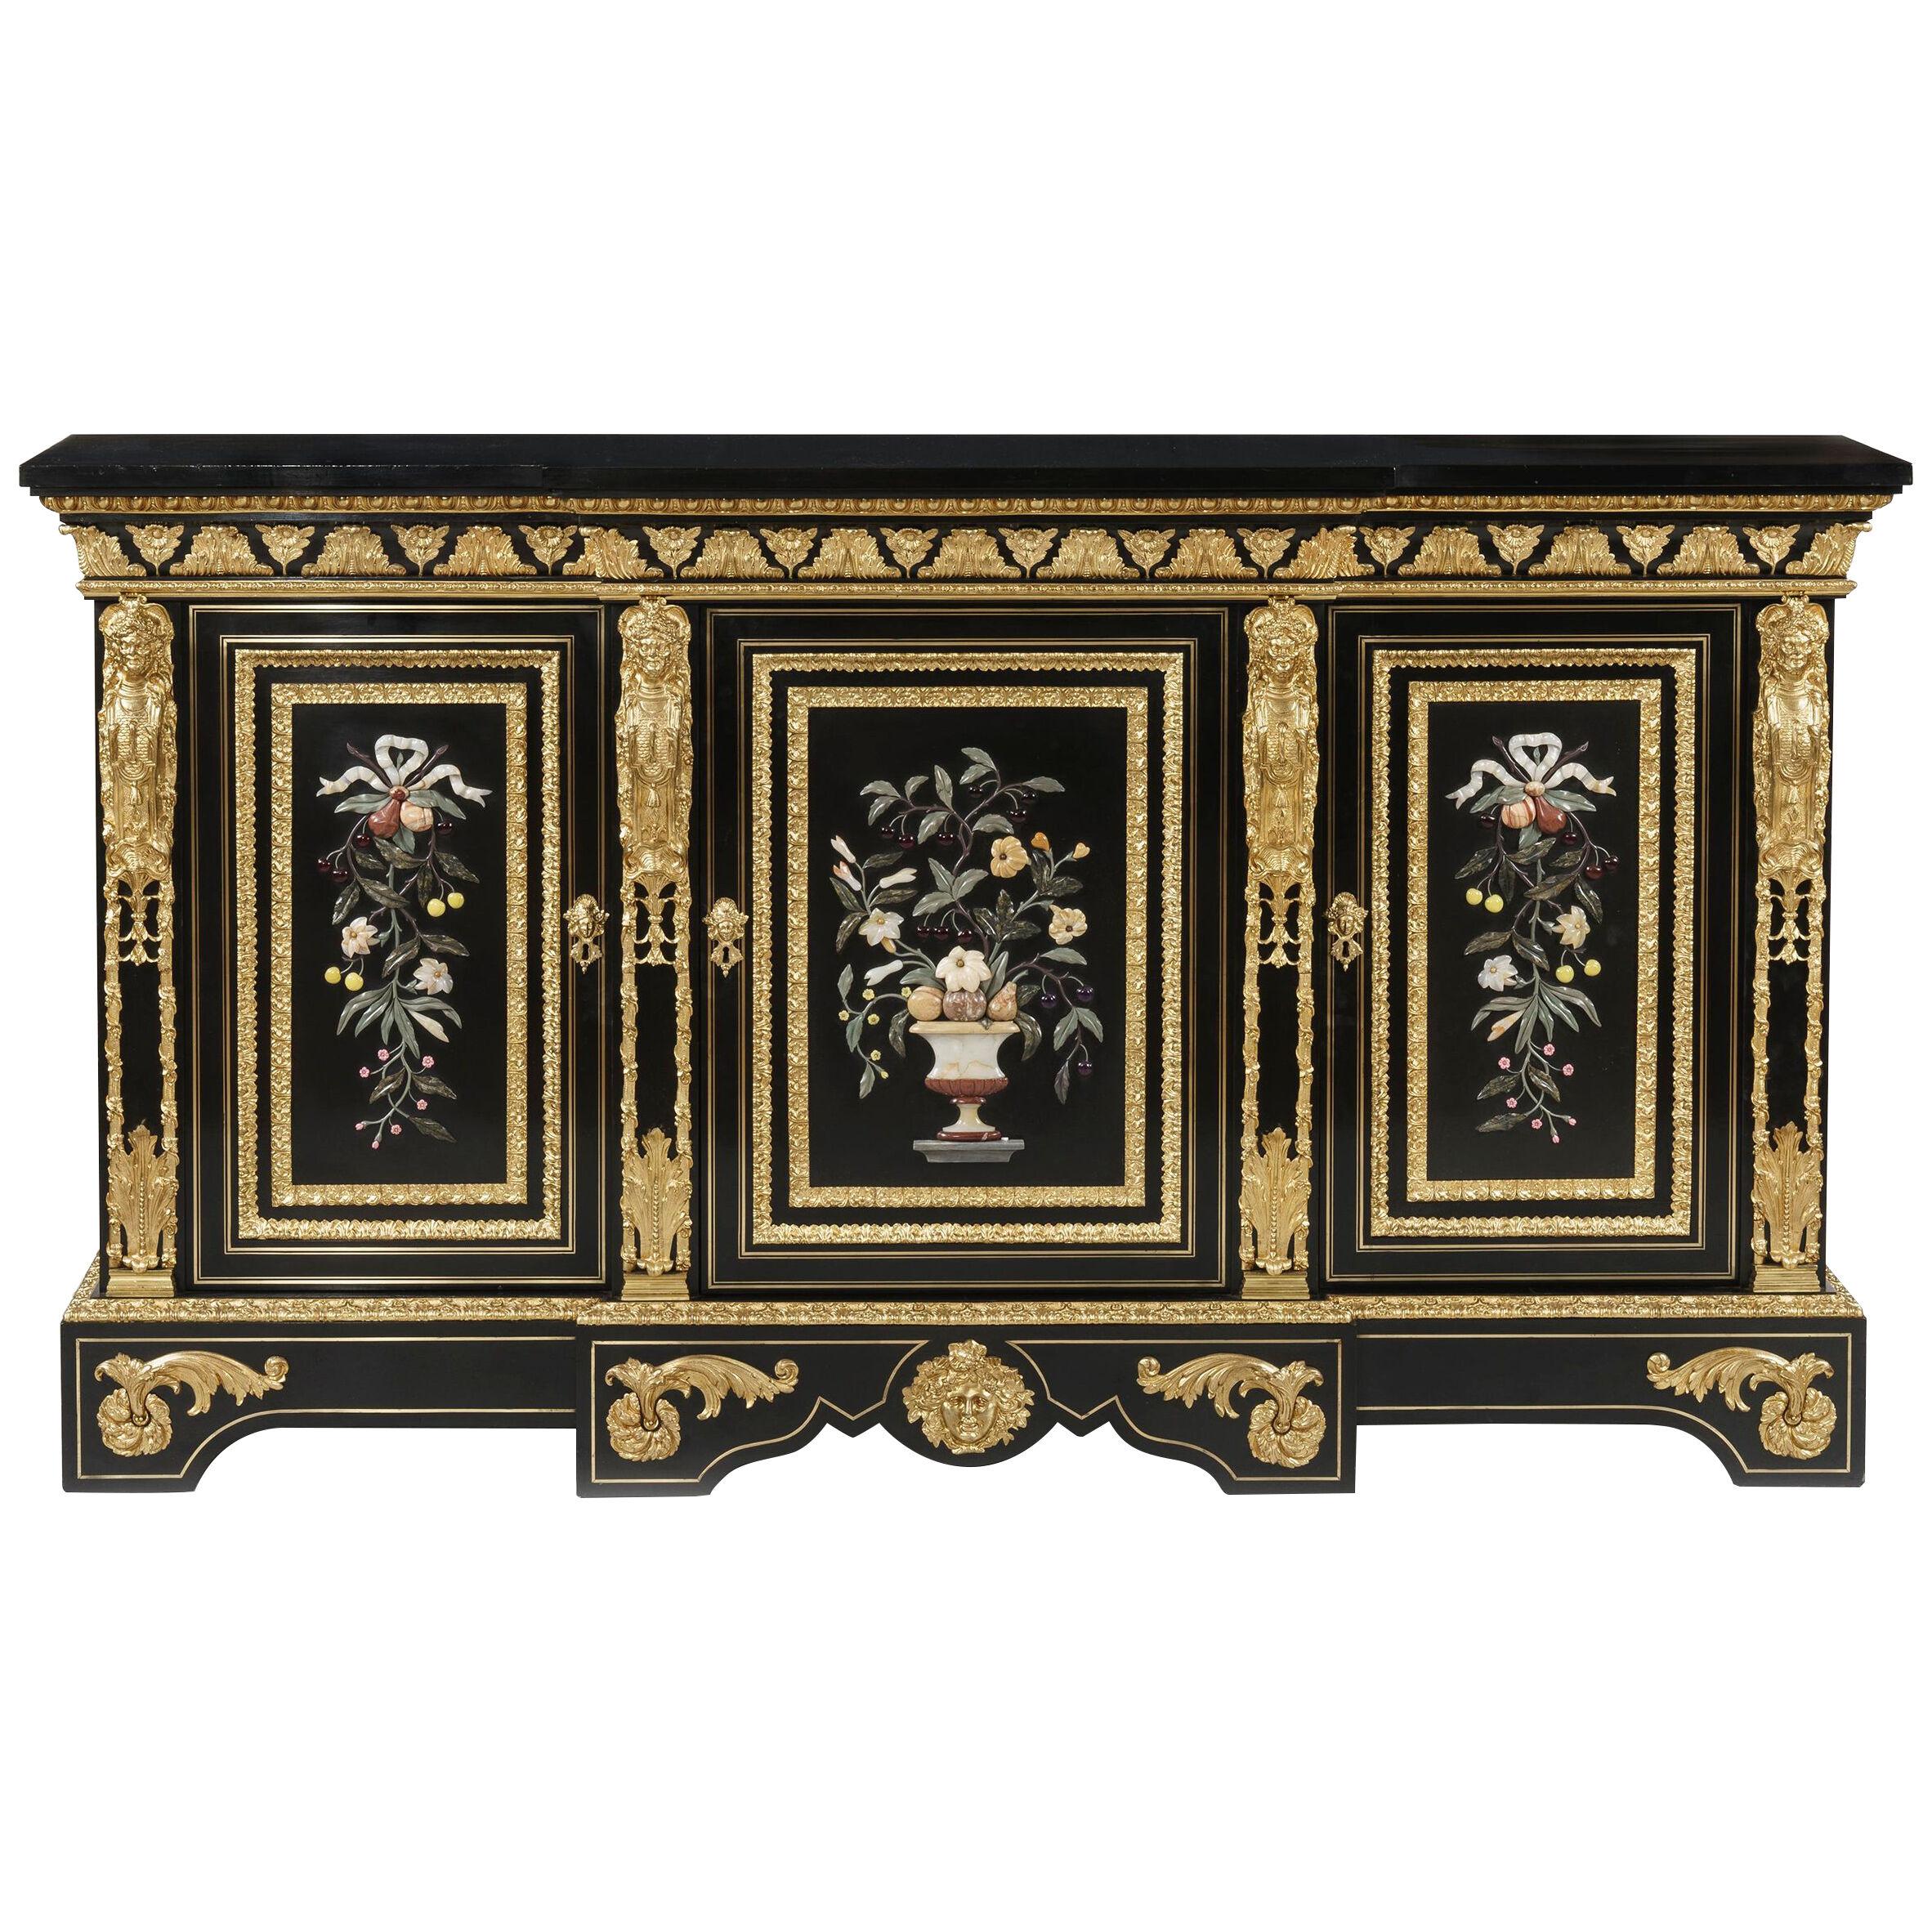 Grand 19th Century Pietre Dure Inlaid Cabinet Attributed to Monbro Fils